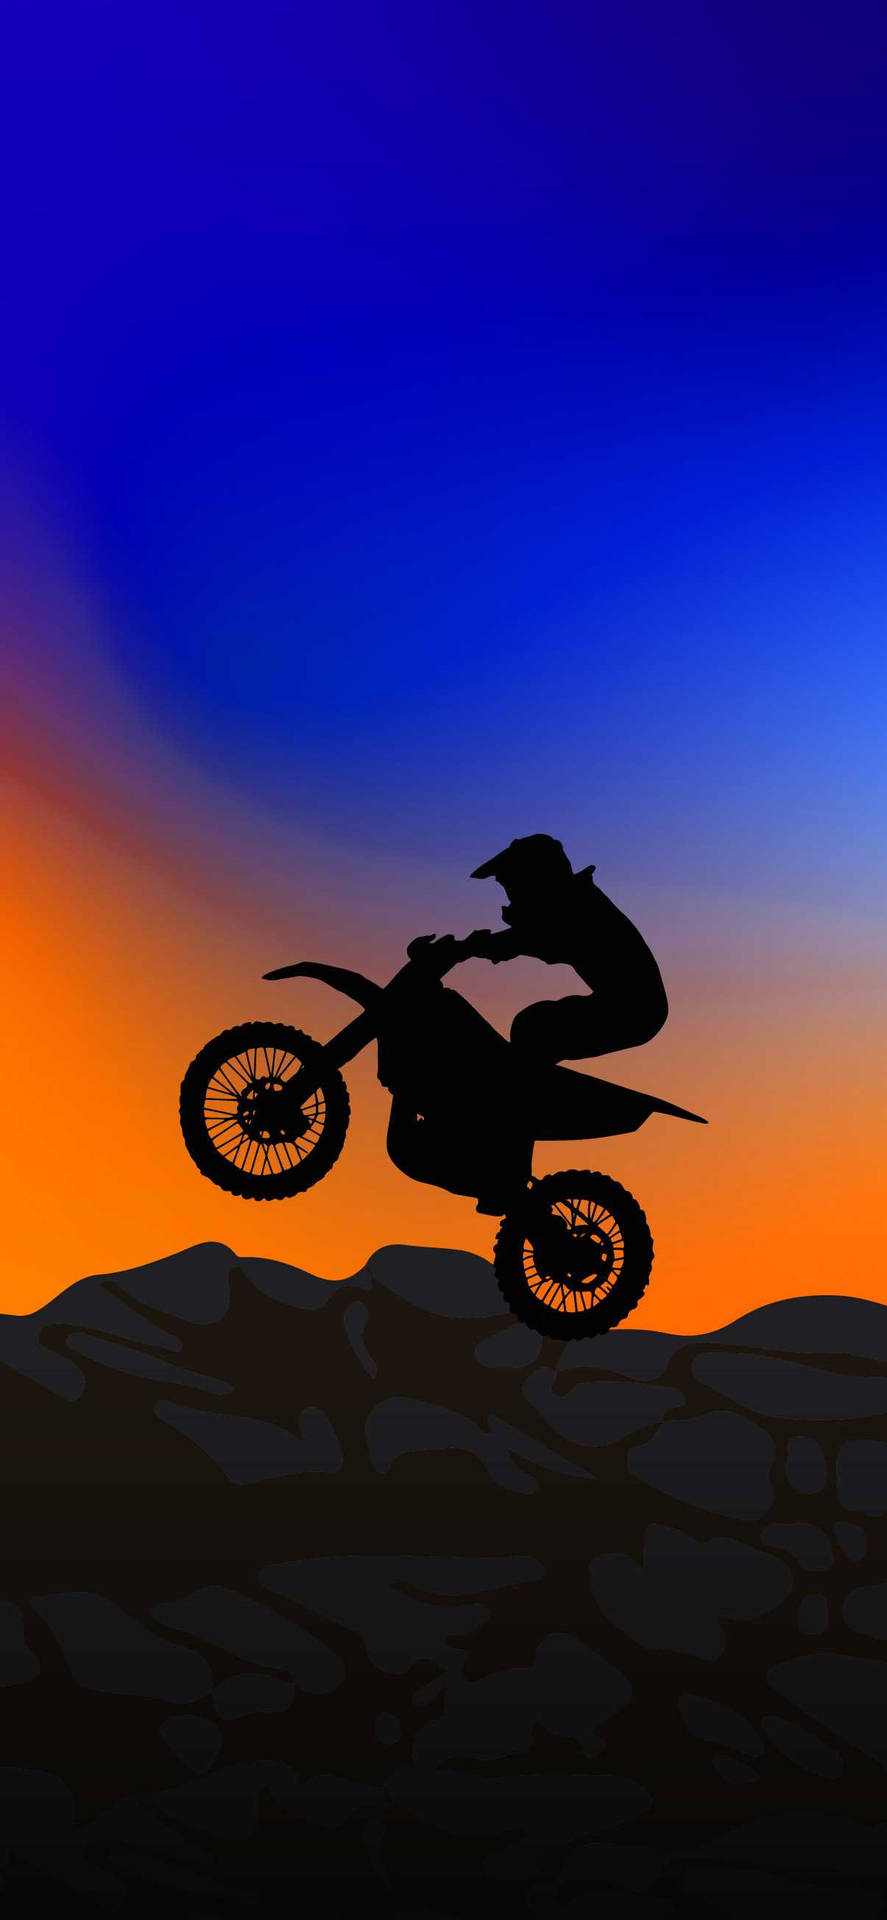 Caption: Extreme Thrill - Dirt Bike Silhouette Taking Flight At Sunset